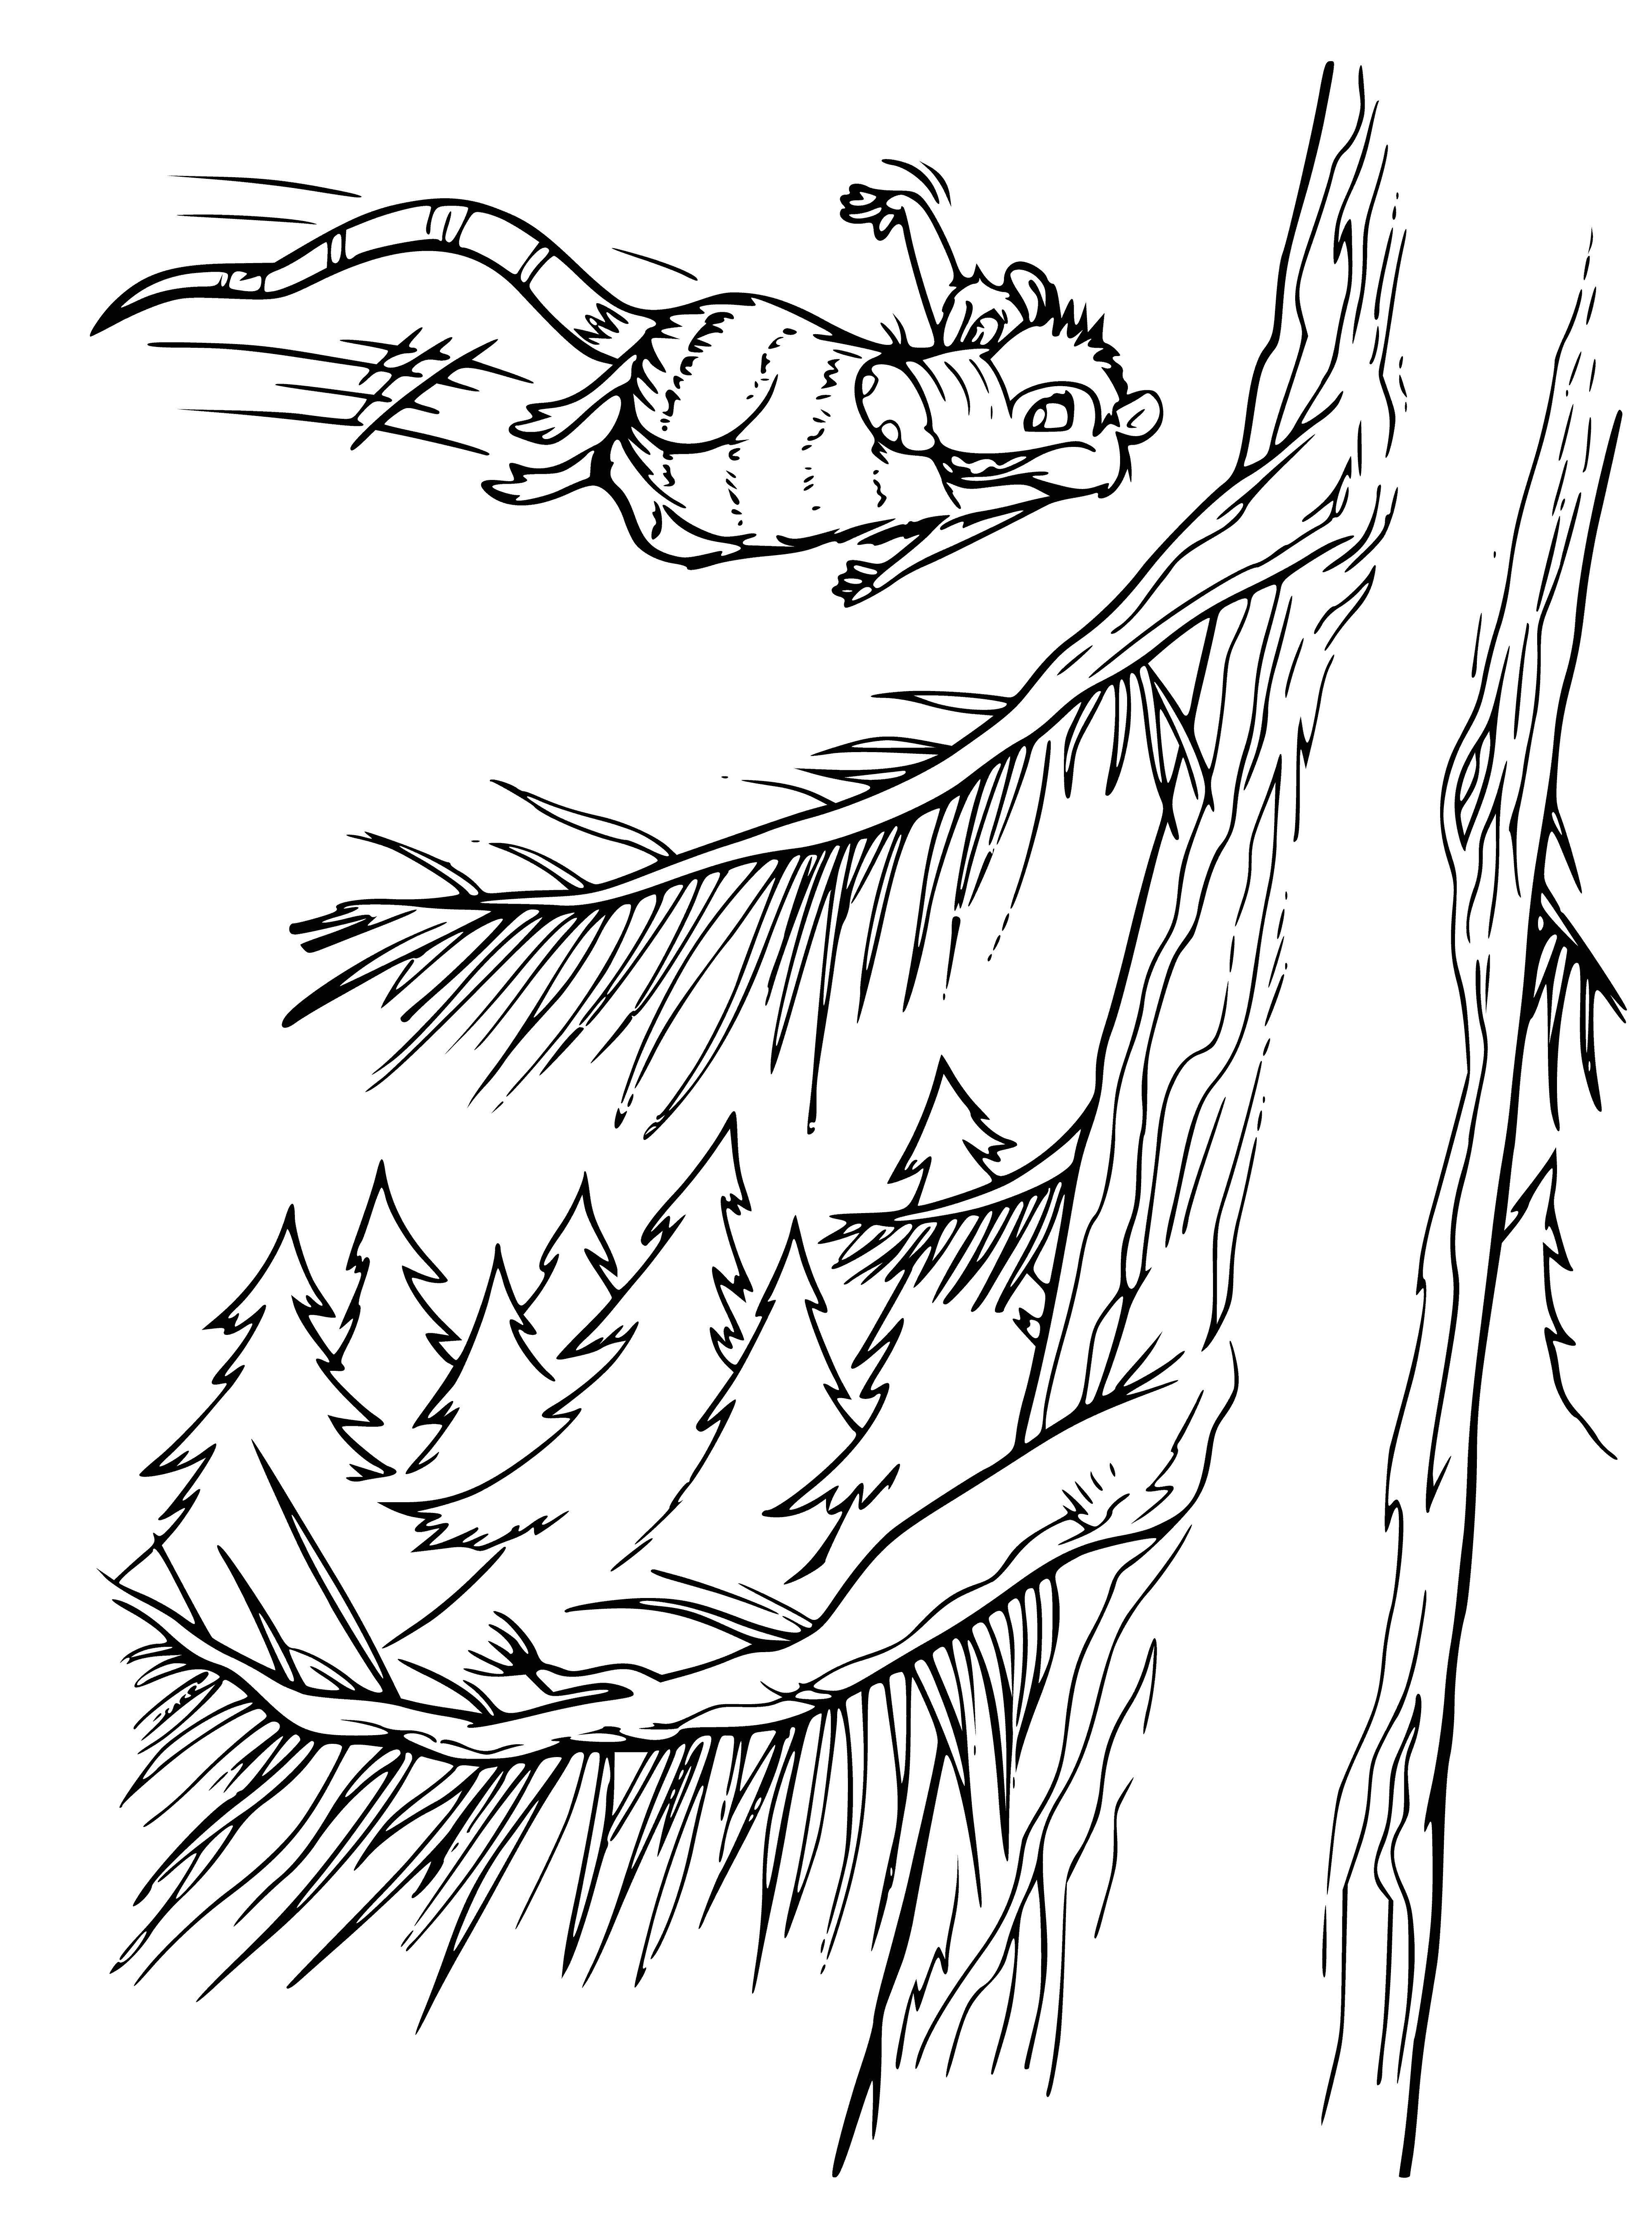 Possum flight coloring page